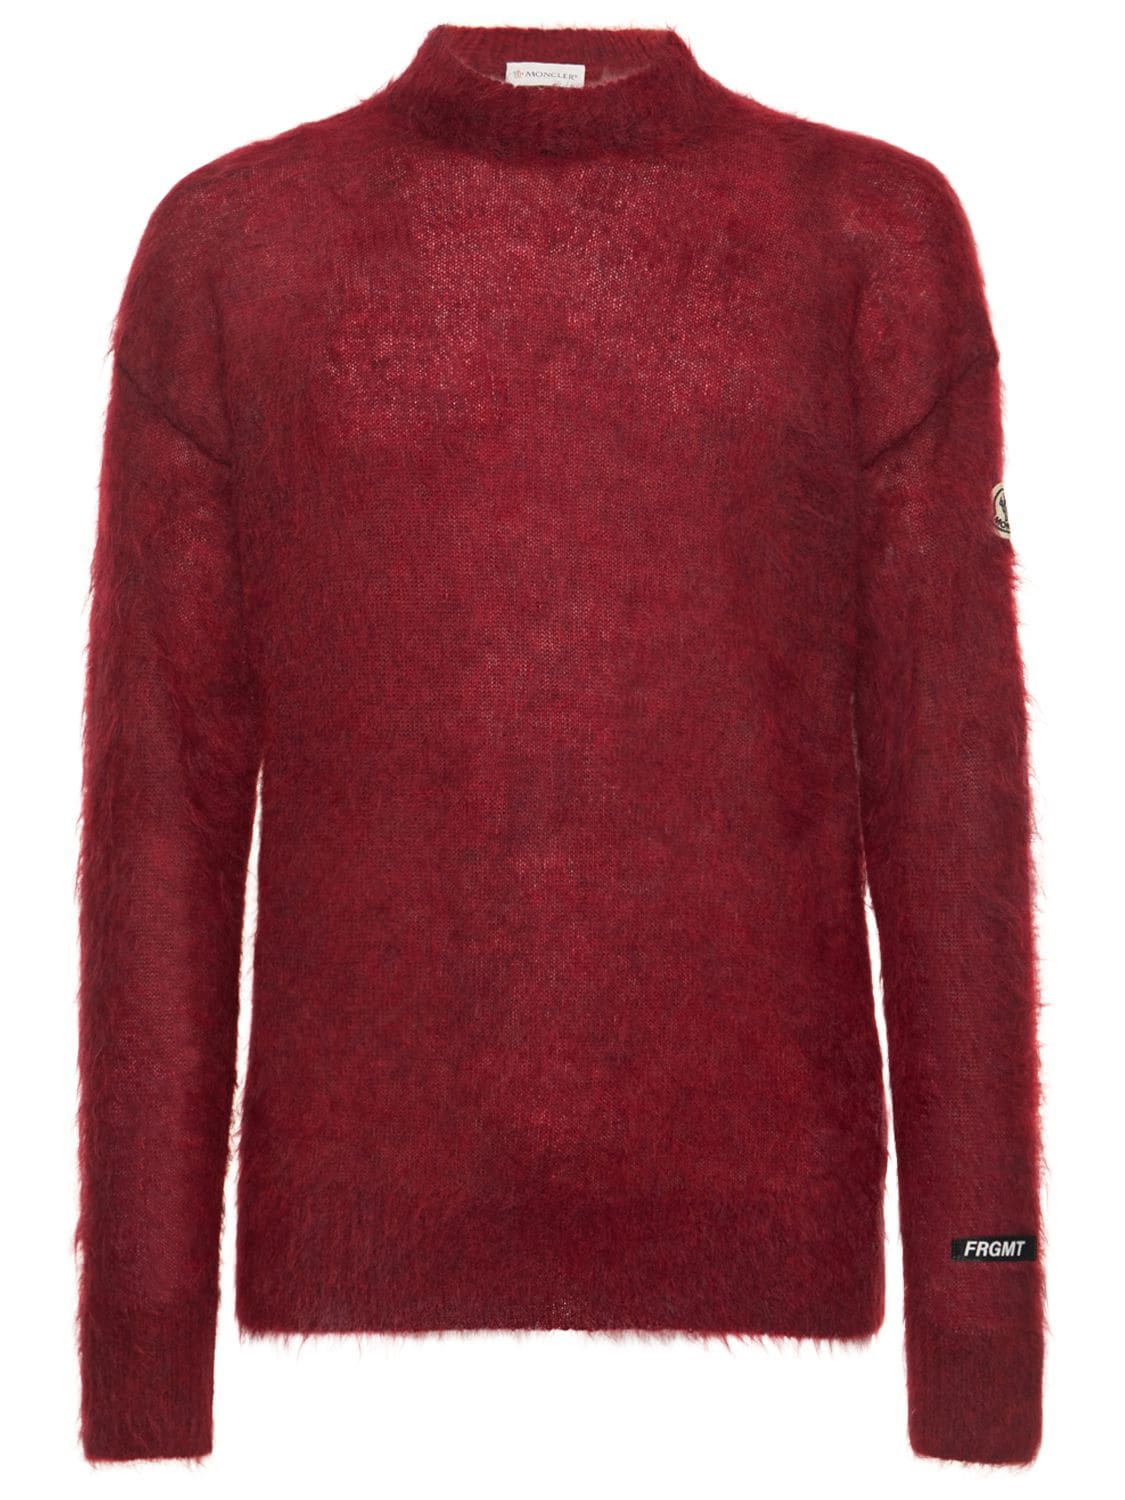 MONCLER GENIUS Tricot Wool Blend Crewneck Sweater